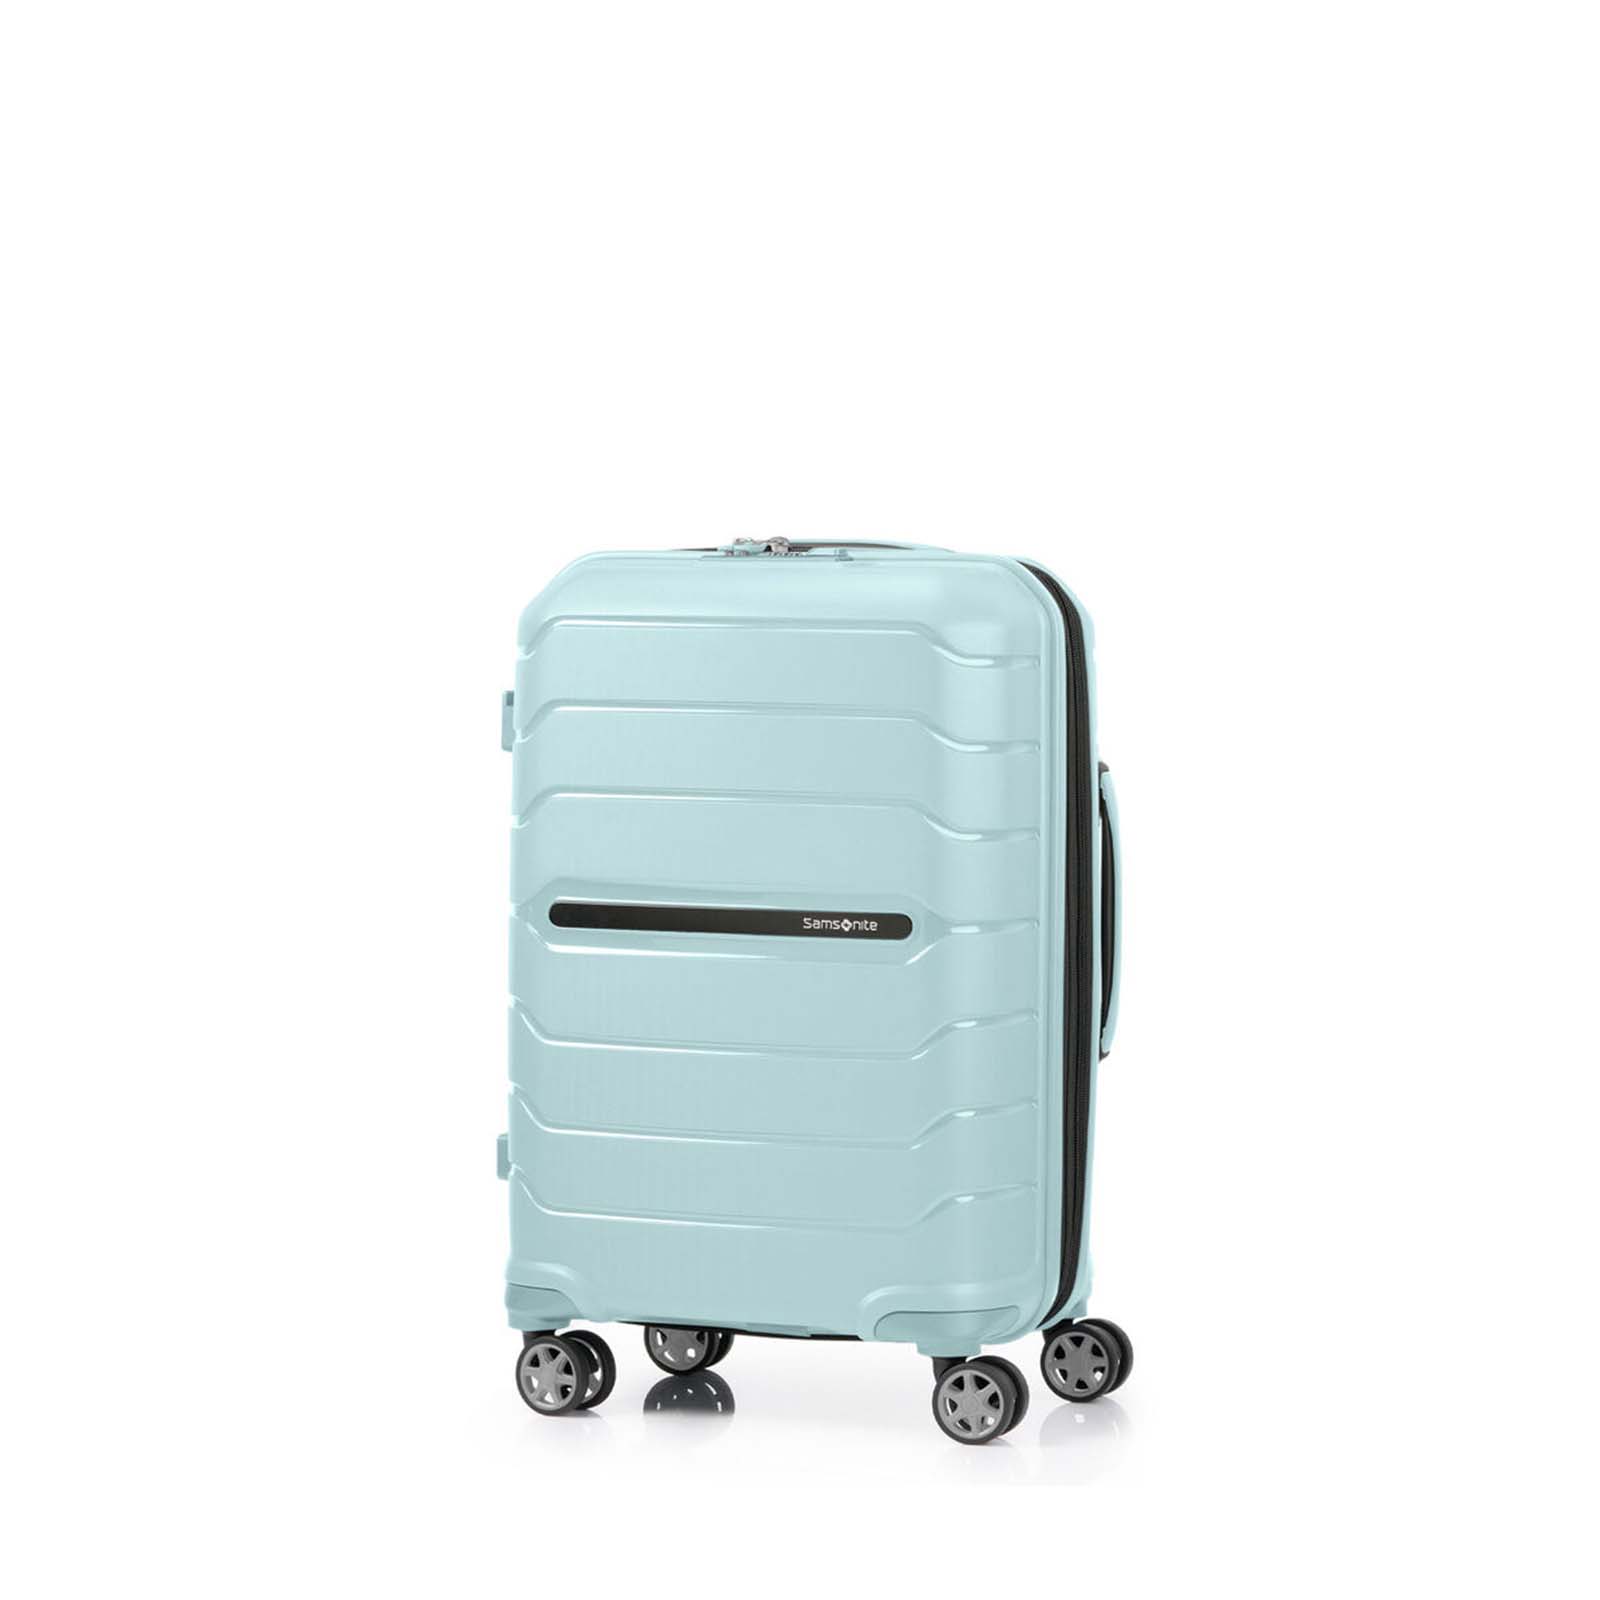 Samsonite-Oc2lite-55cm-Carry-On-Suitcase-Lagoon-Blue-Front-Angle